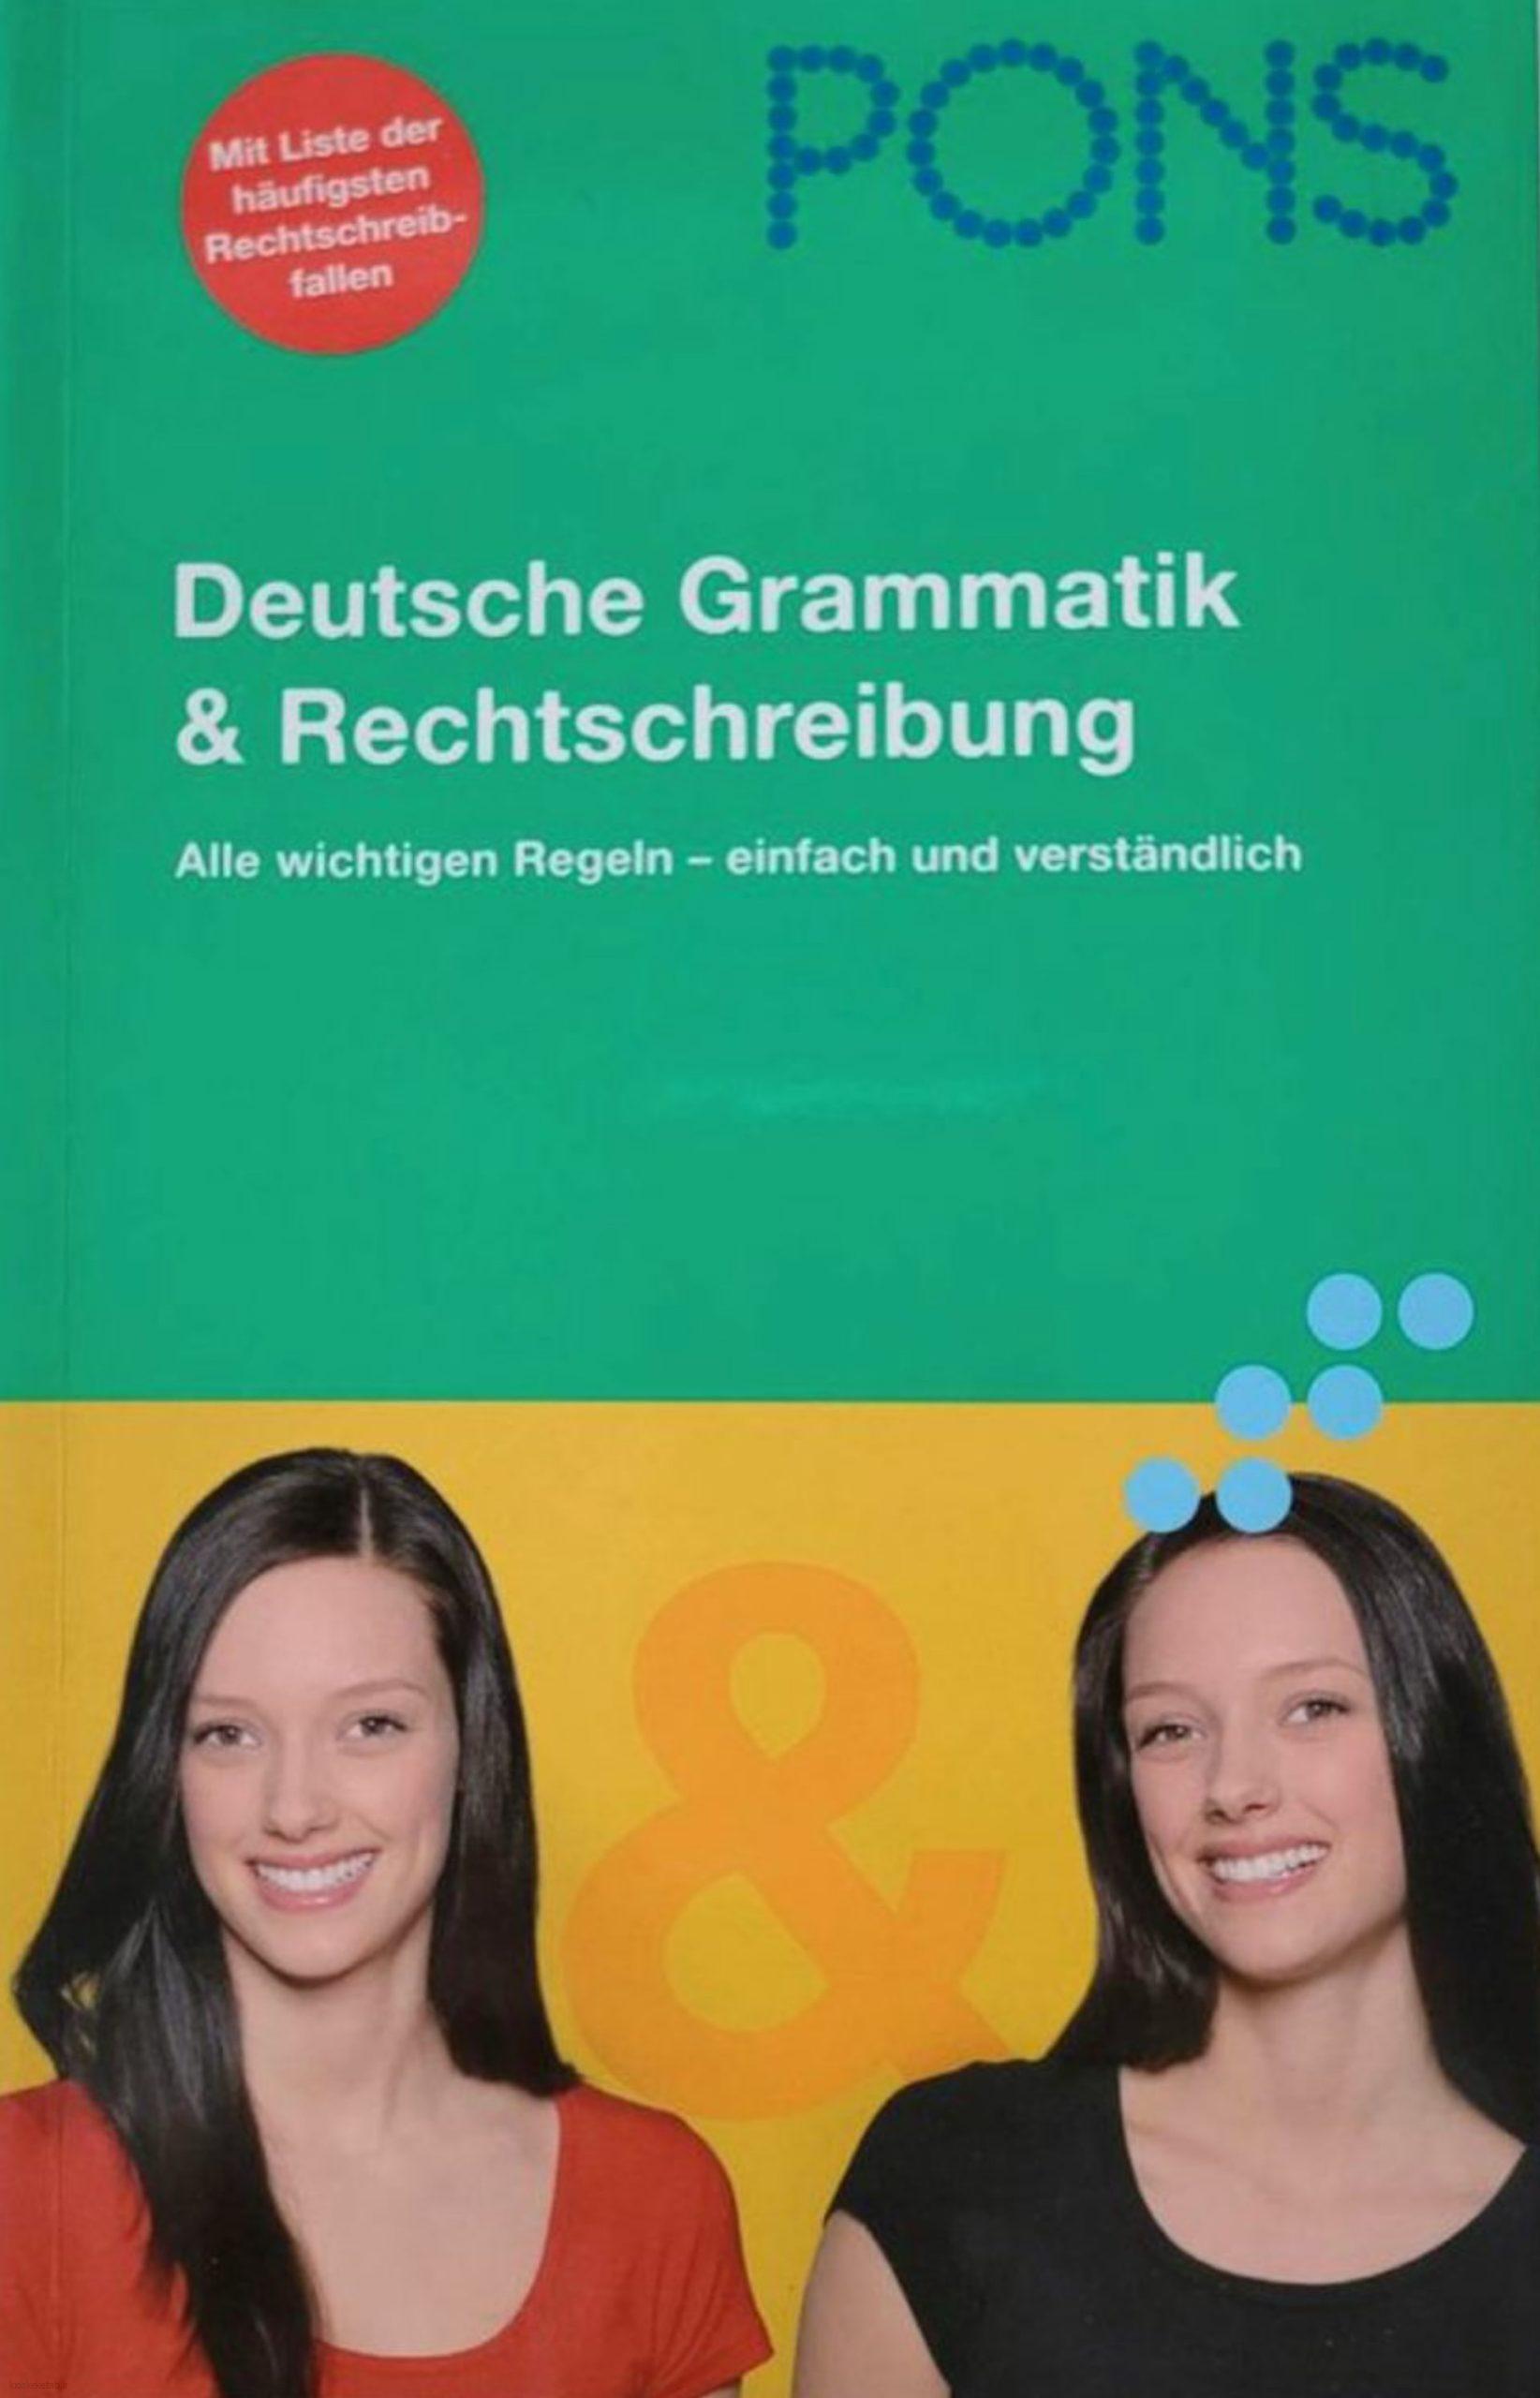 دانلود کتاب آلمانیpons deutsche grammatik & rechtschreibung